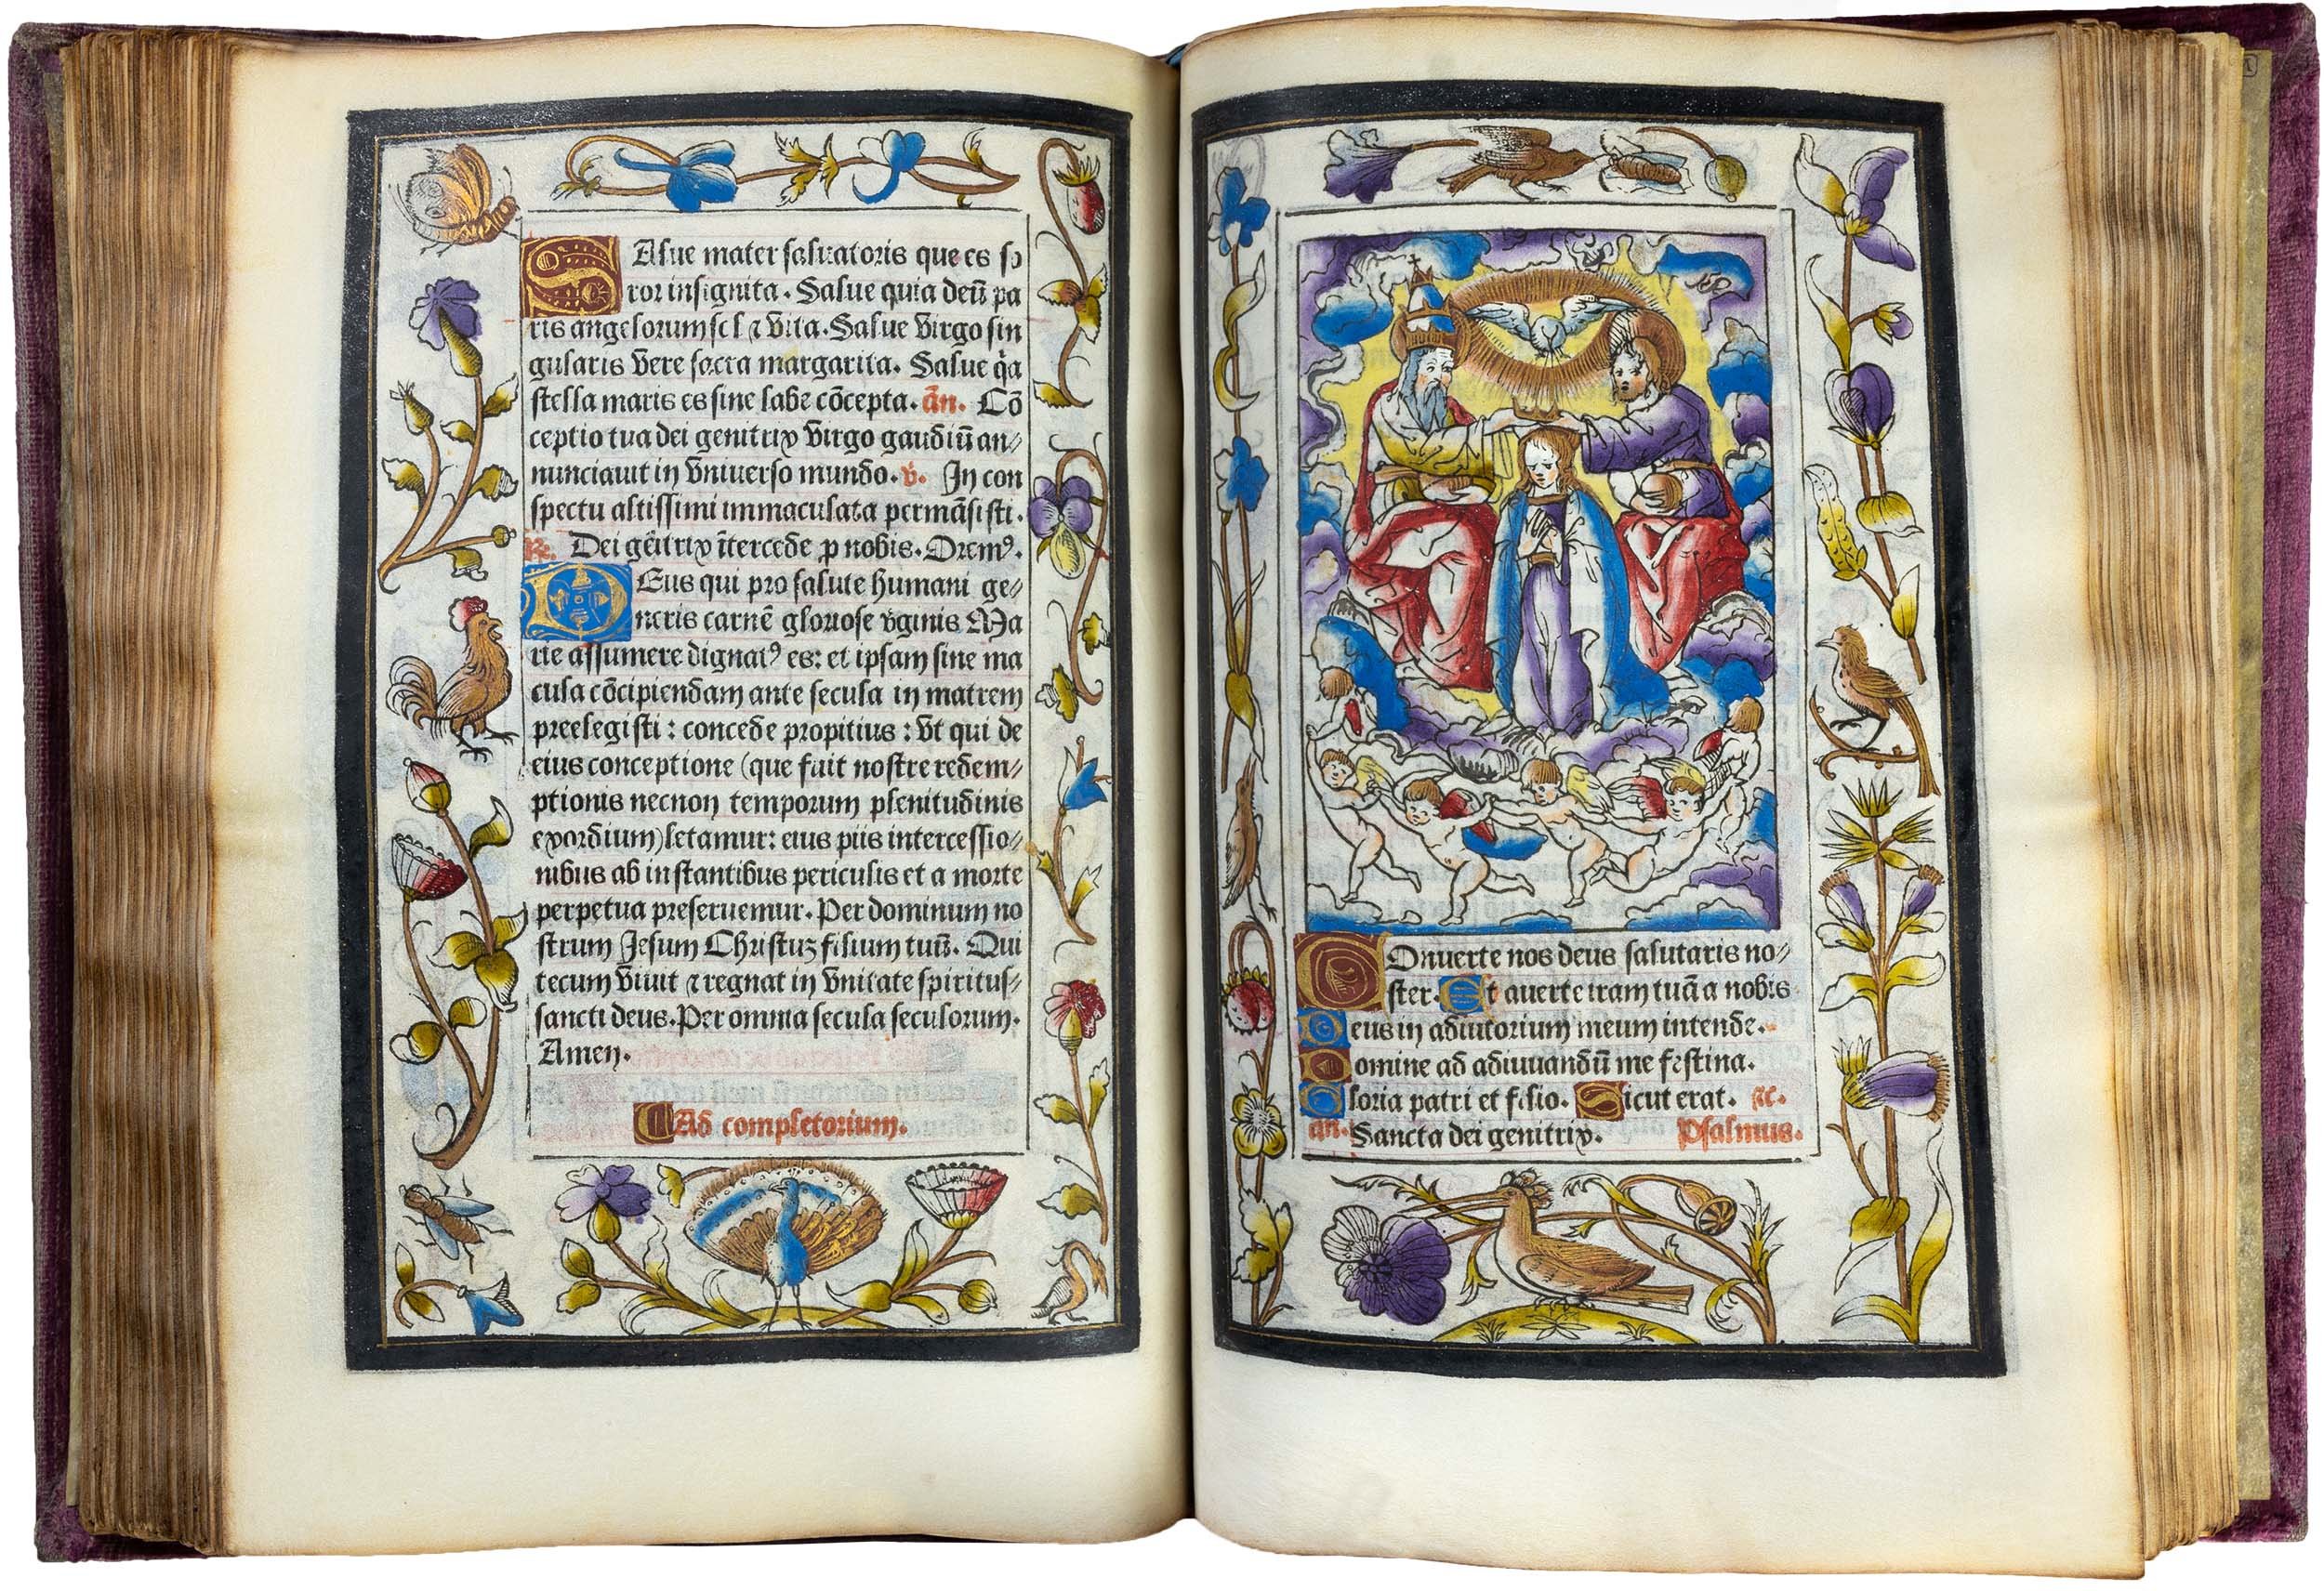 geoffroy-tory-printed-book-of-hours-illuminated-vellum-22-october-1527-prince-dessing-villeneuve-horae-bmv-89.jpg